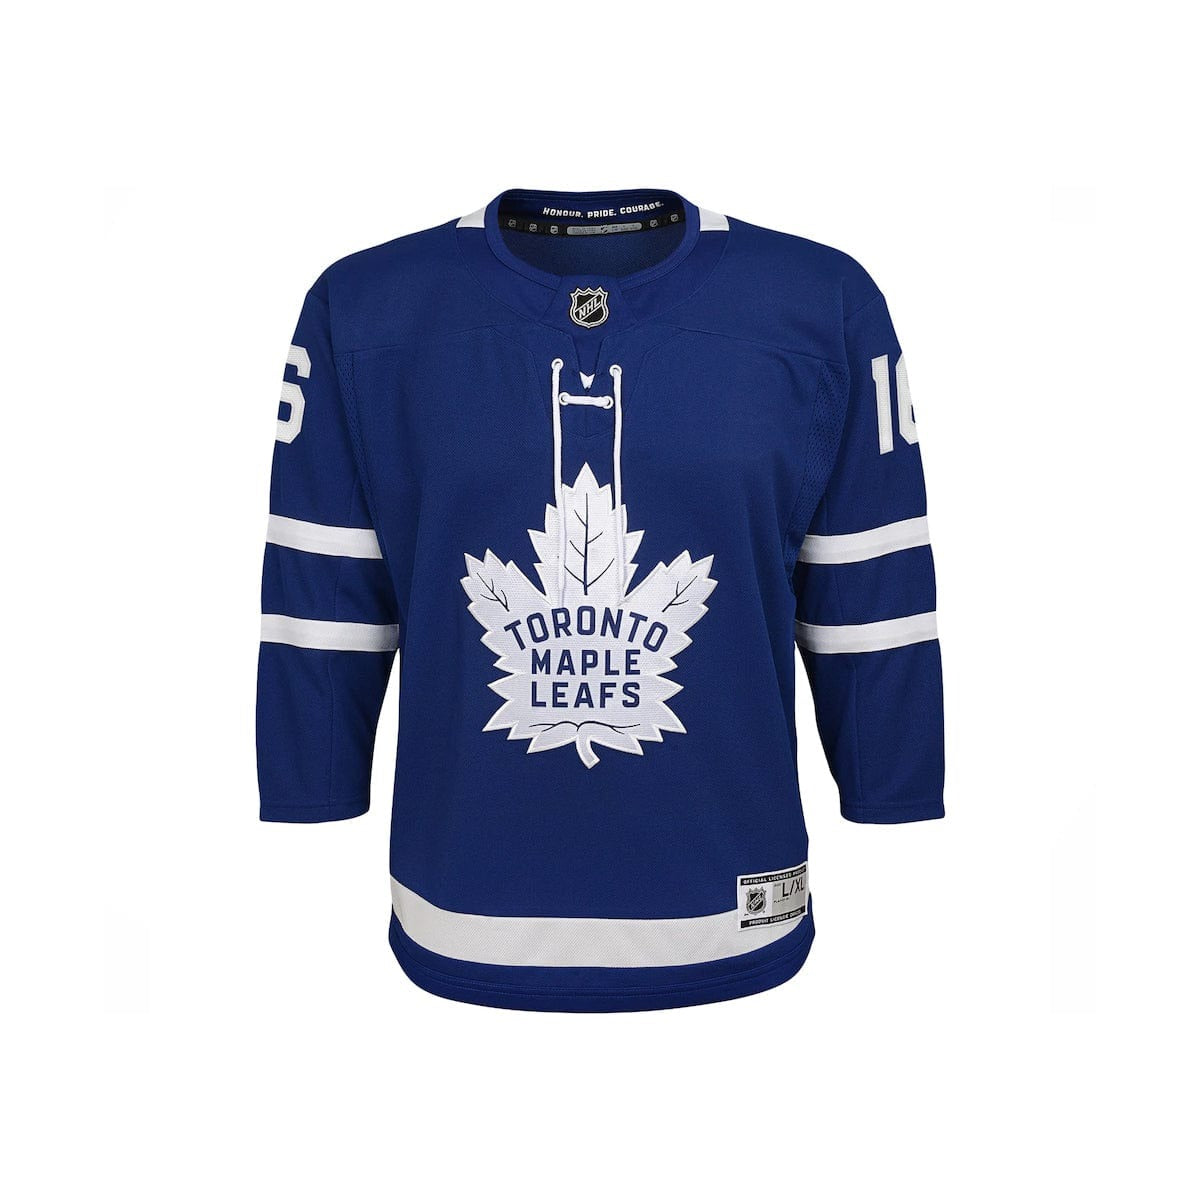 Outerstuff Reverse Retro Premier Jersey Hockey - Toronto Maple Leafs - Youth - Toronto Maple Leafs - L/XL